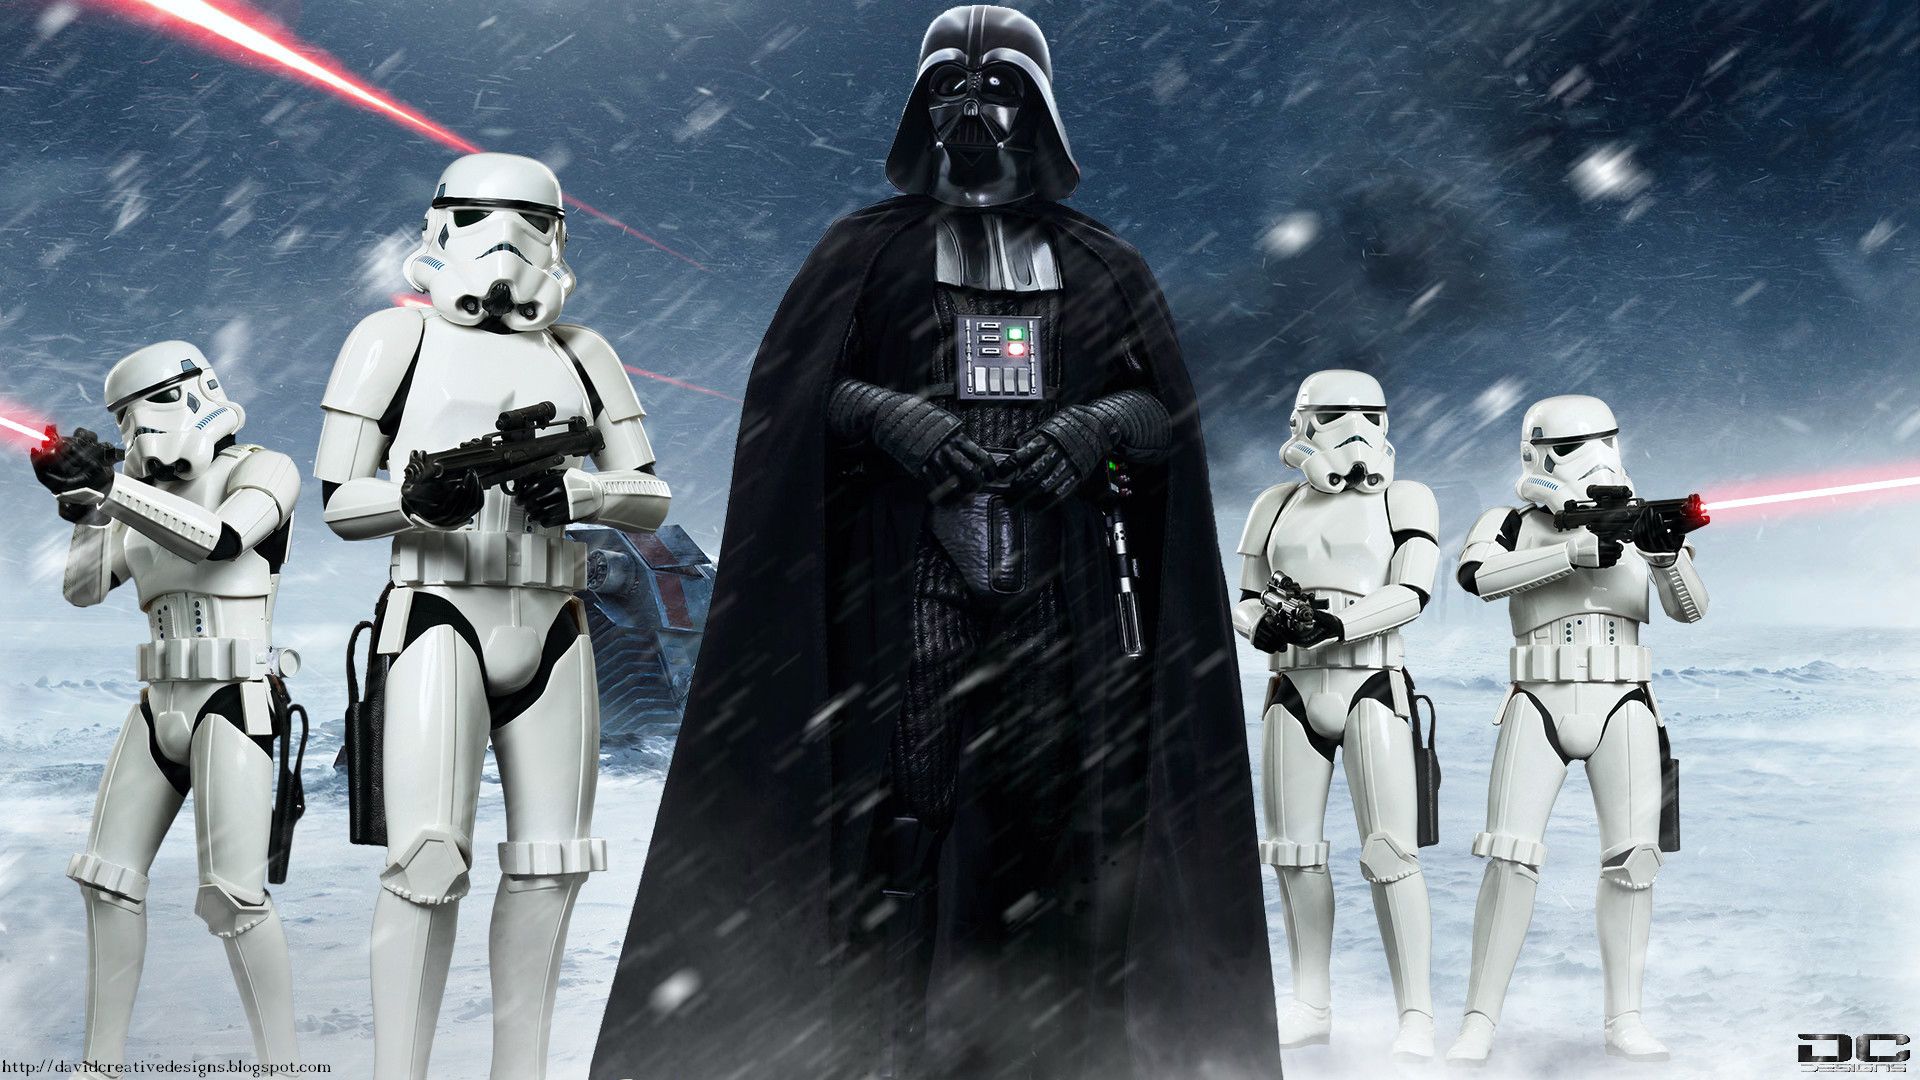 Star Wars Darth Vader Wallpaper background picture